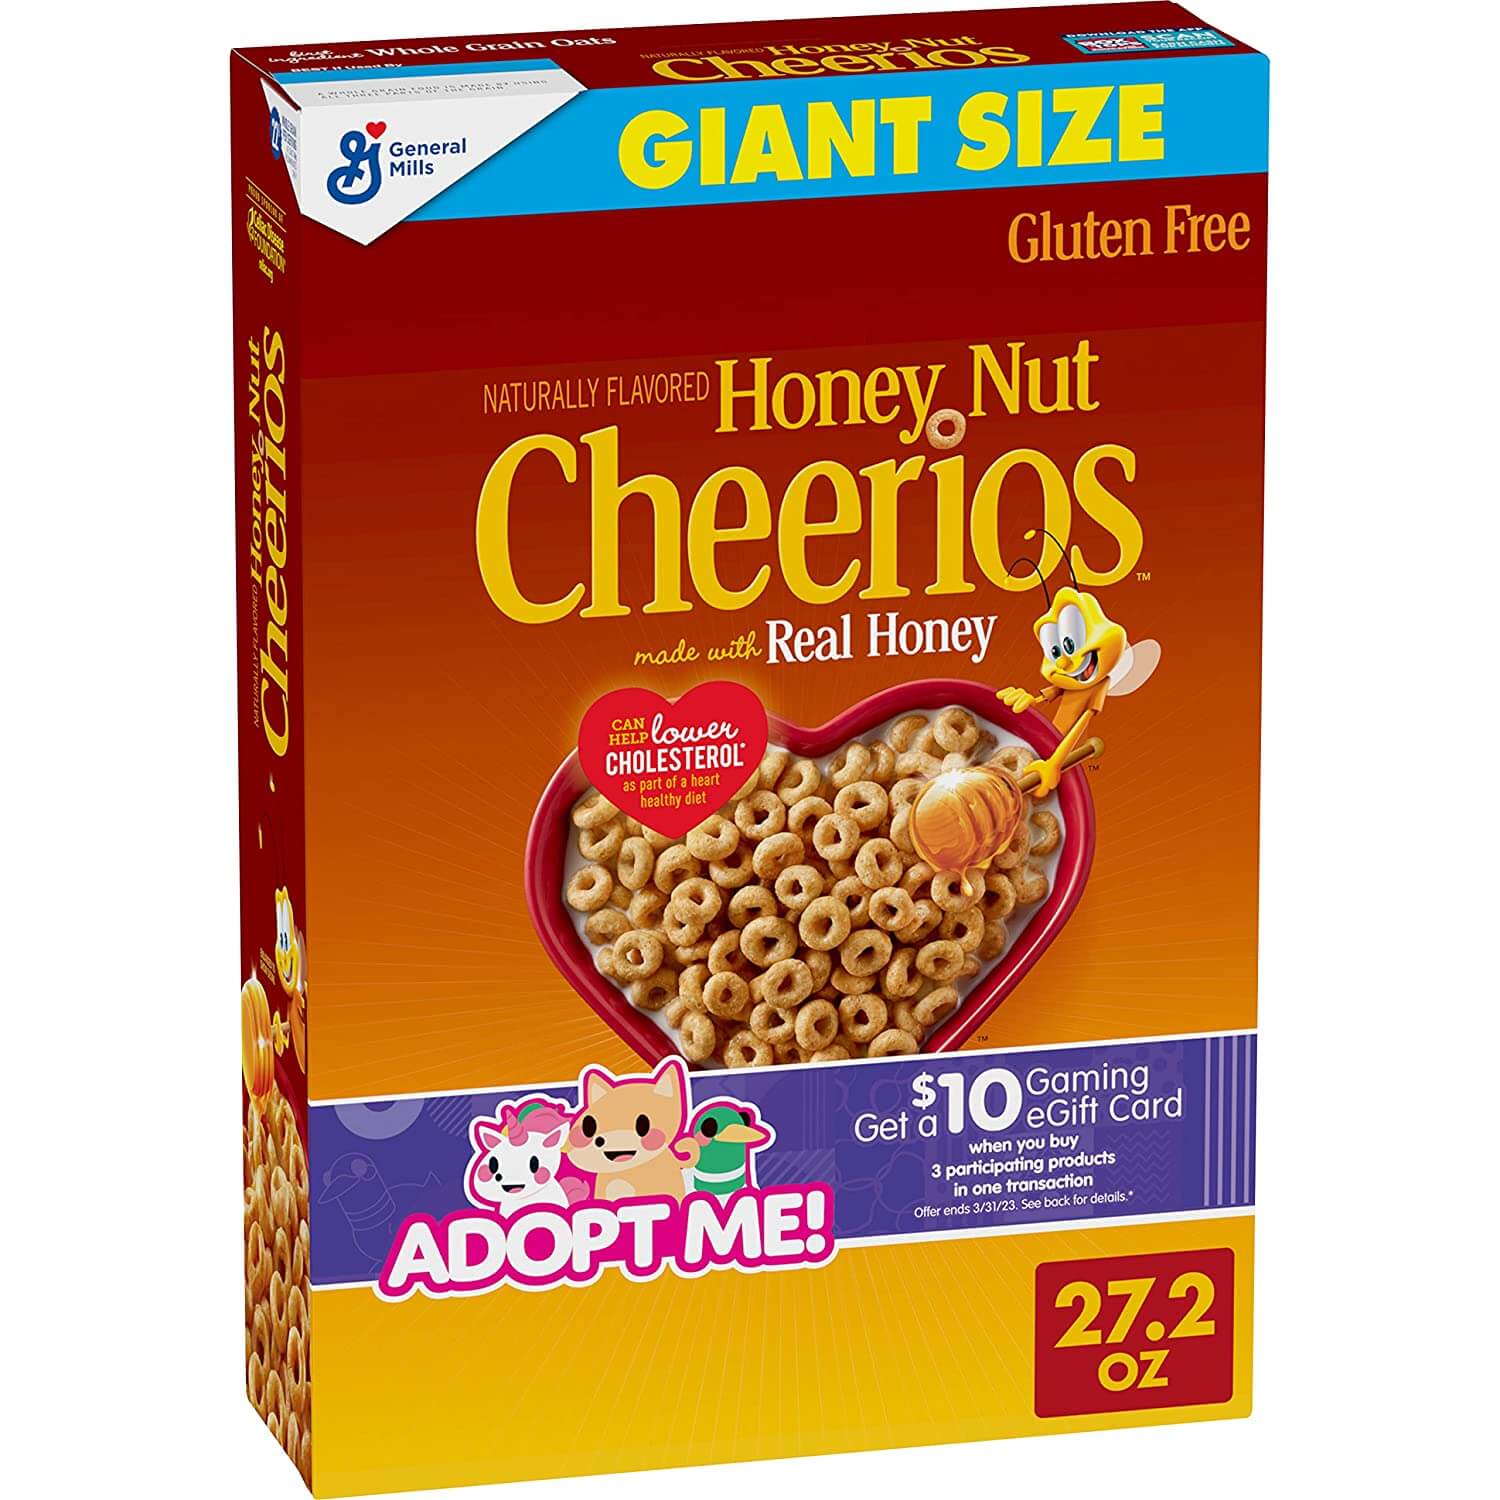 Honey Nut Cheerios